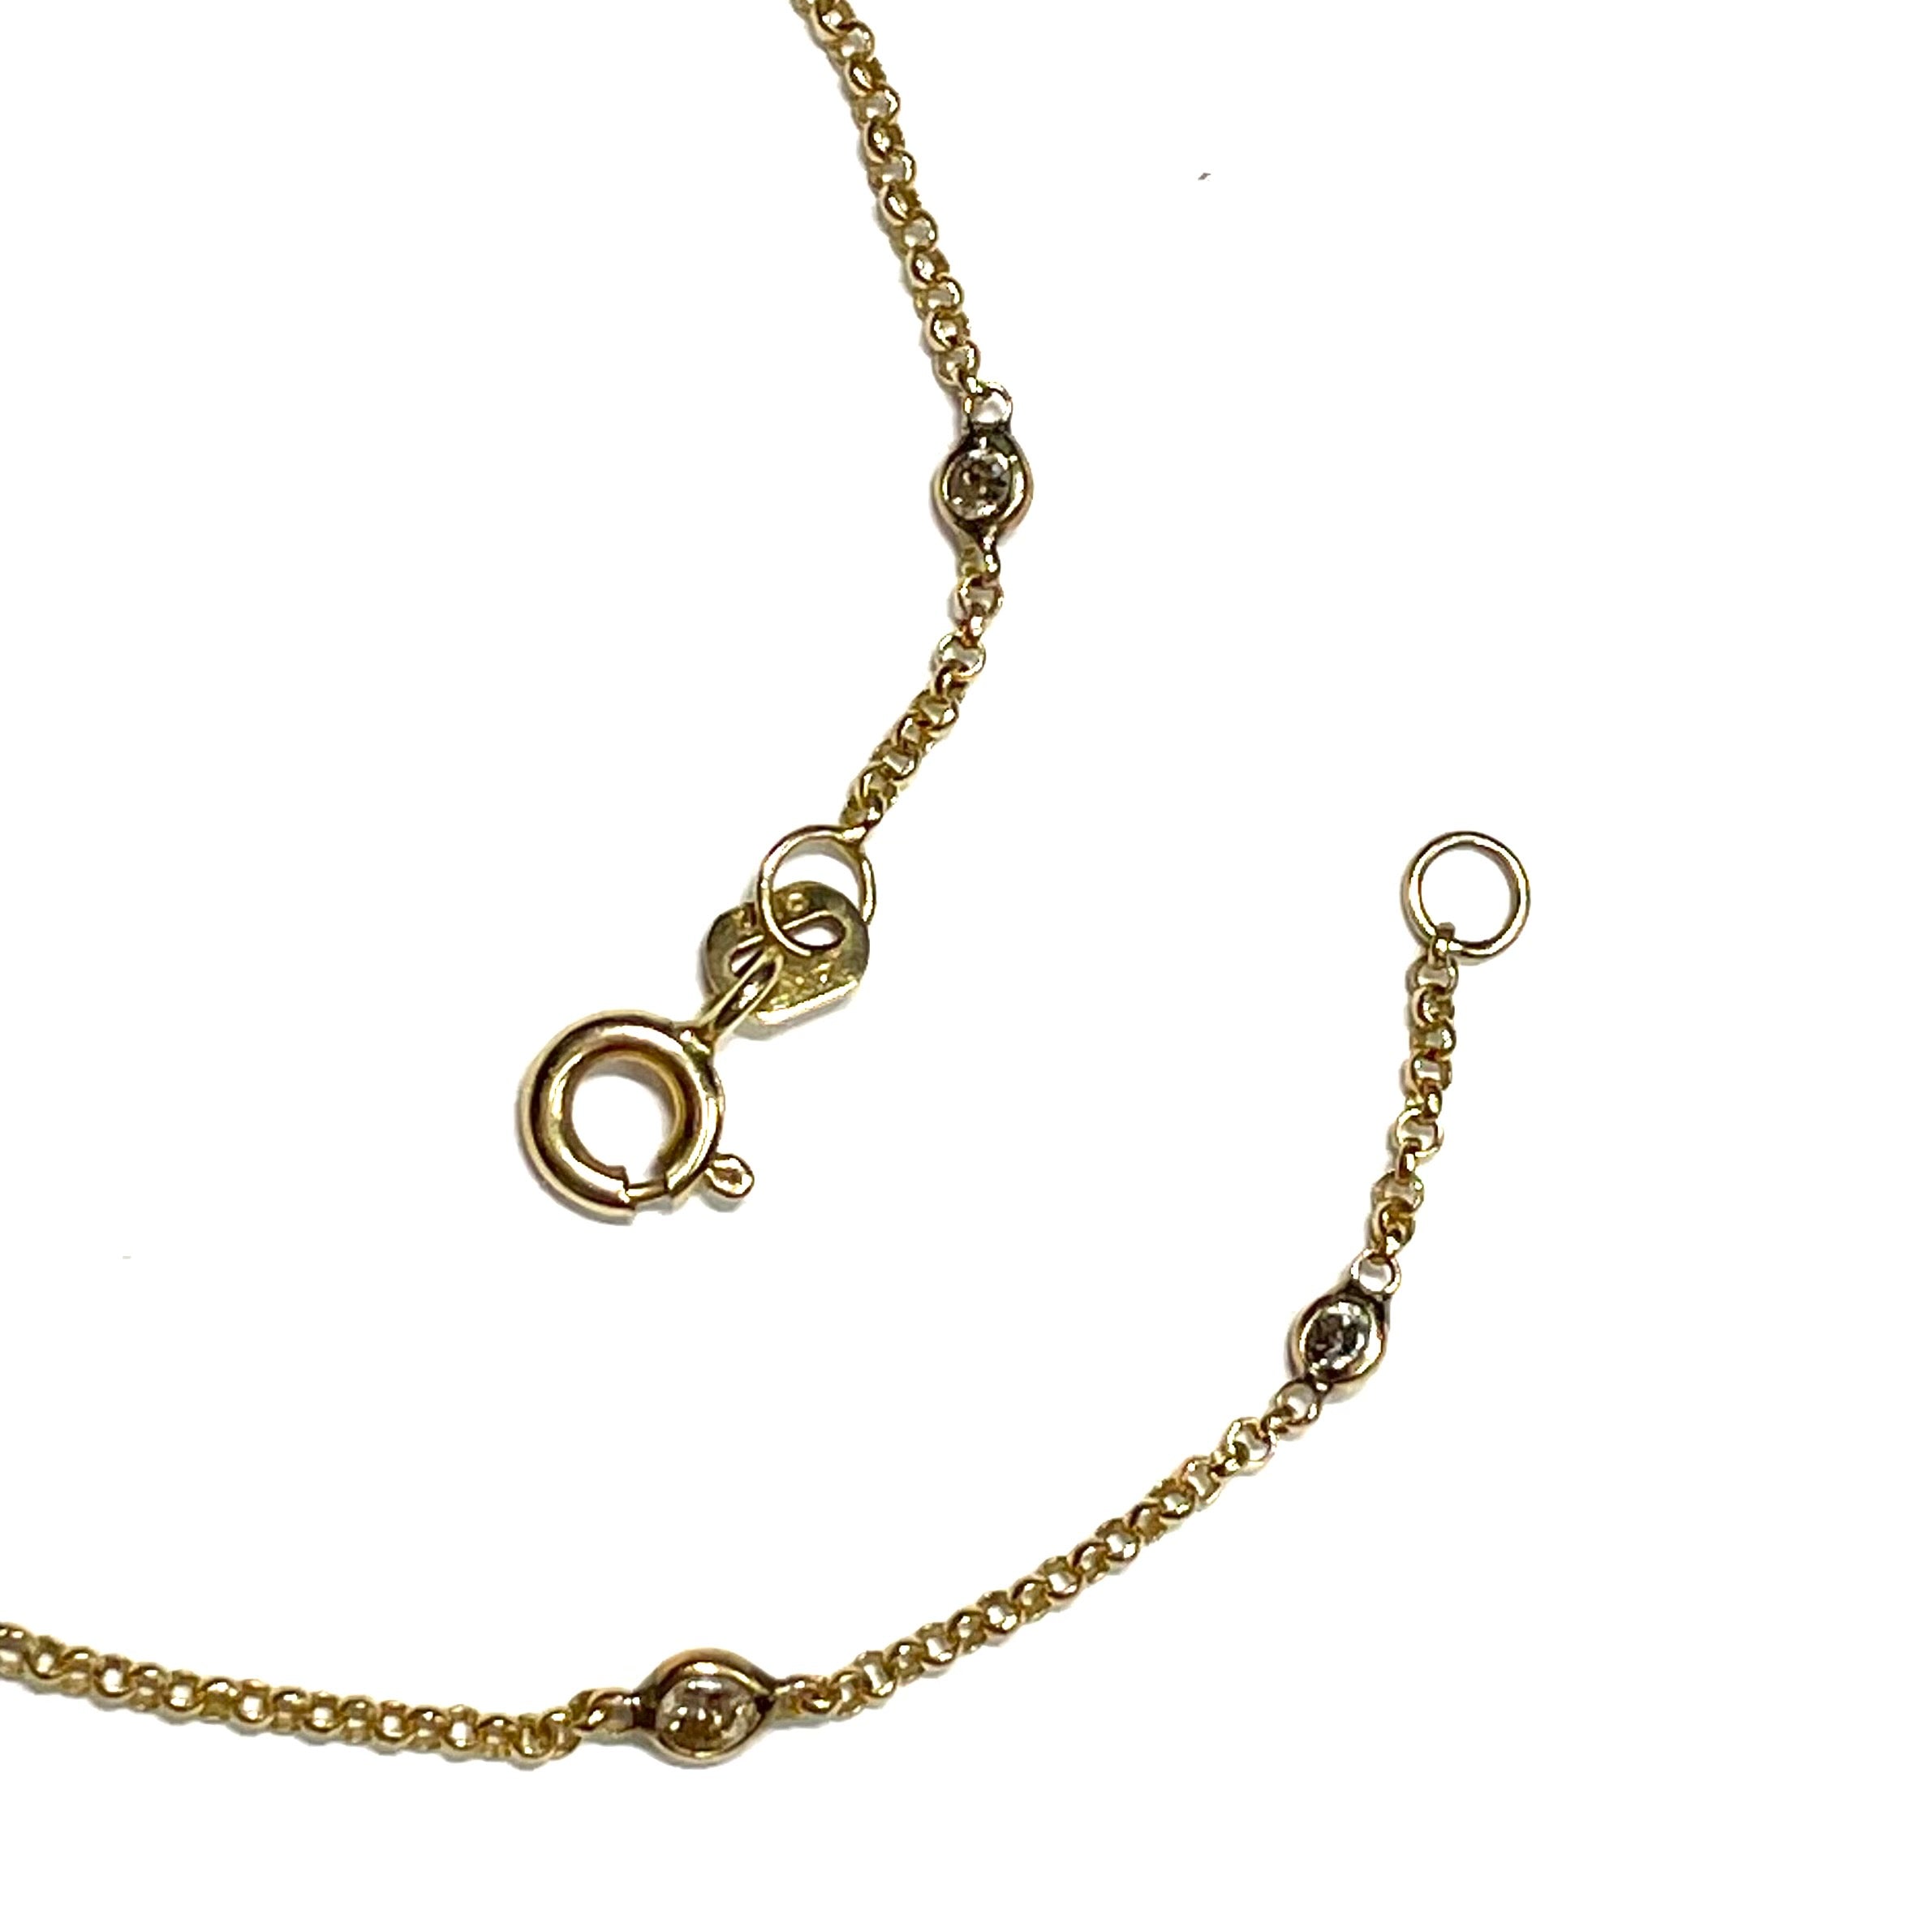 Nine Diamond Bracelet in Solid 14k Yellow Gold 7.5"